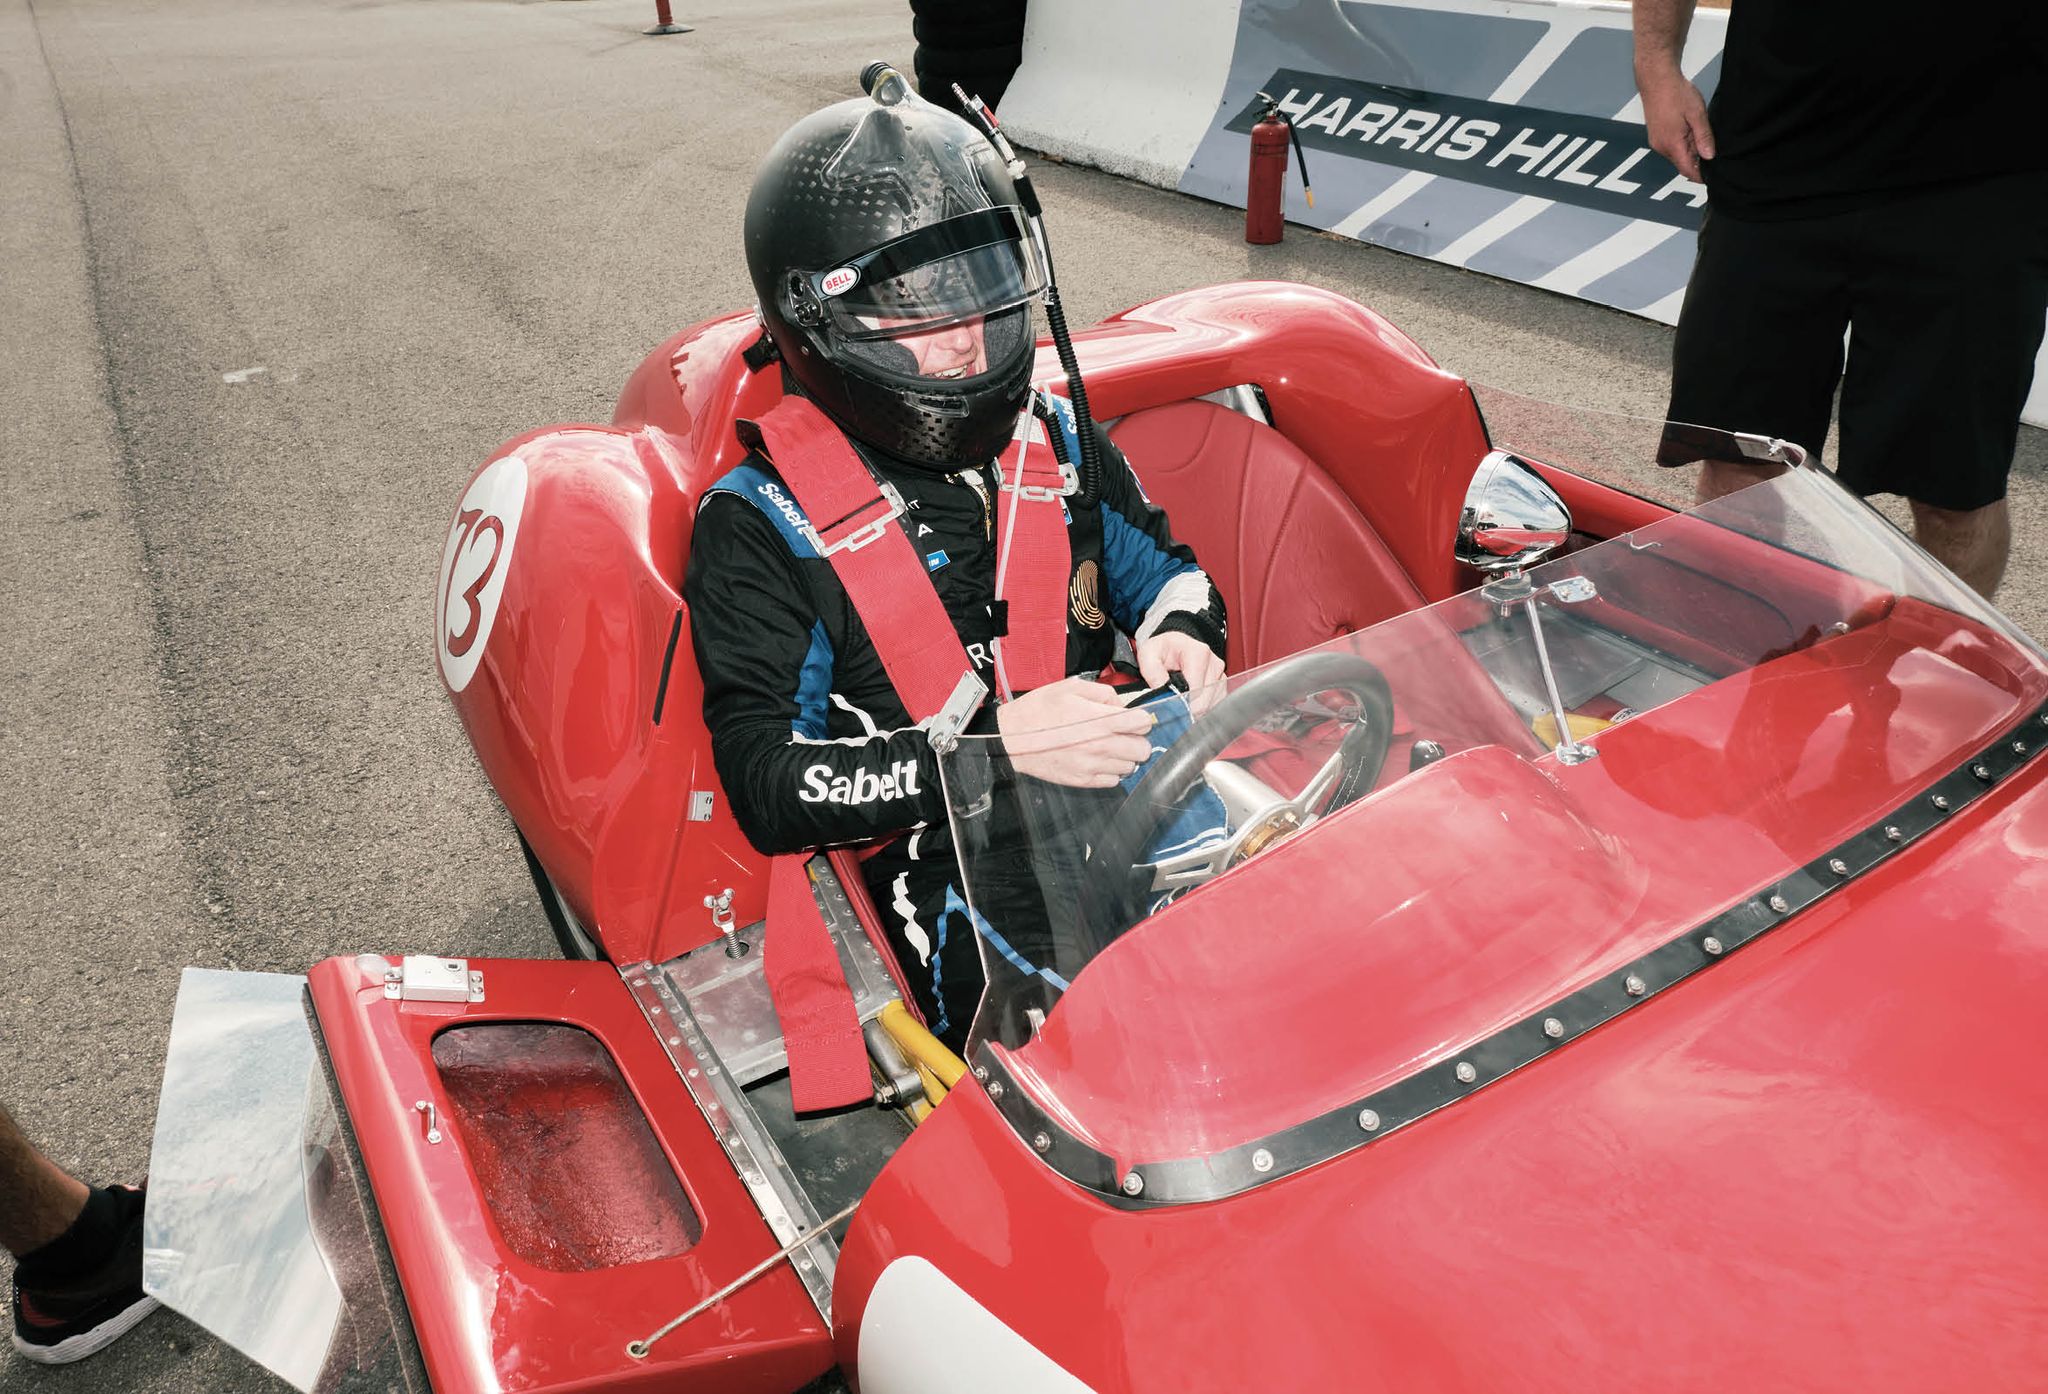 bechtolsheimer at harris hill raceway in texas at the wheel of a 1958 lola mk1